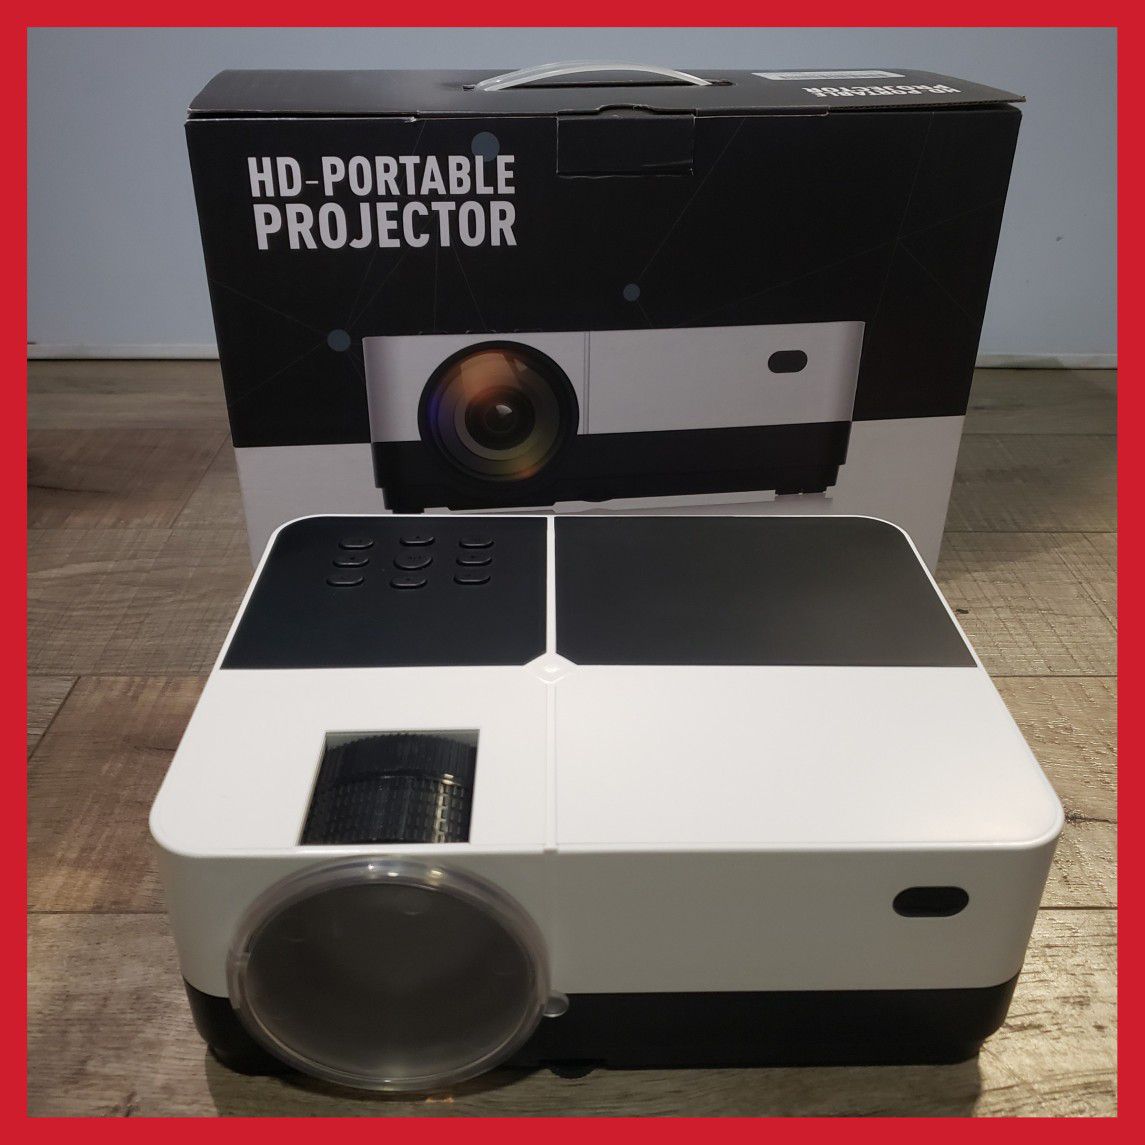 HD-Portable Projector